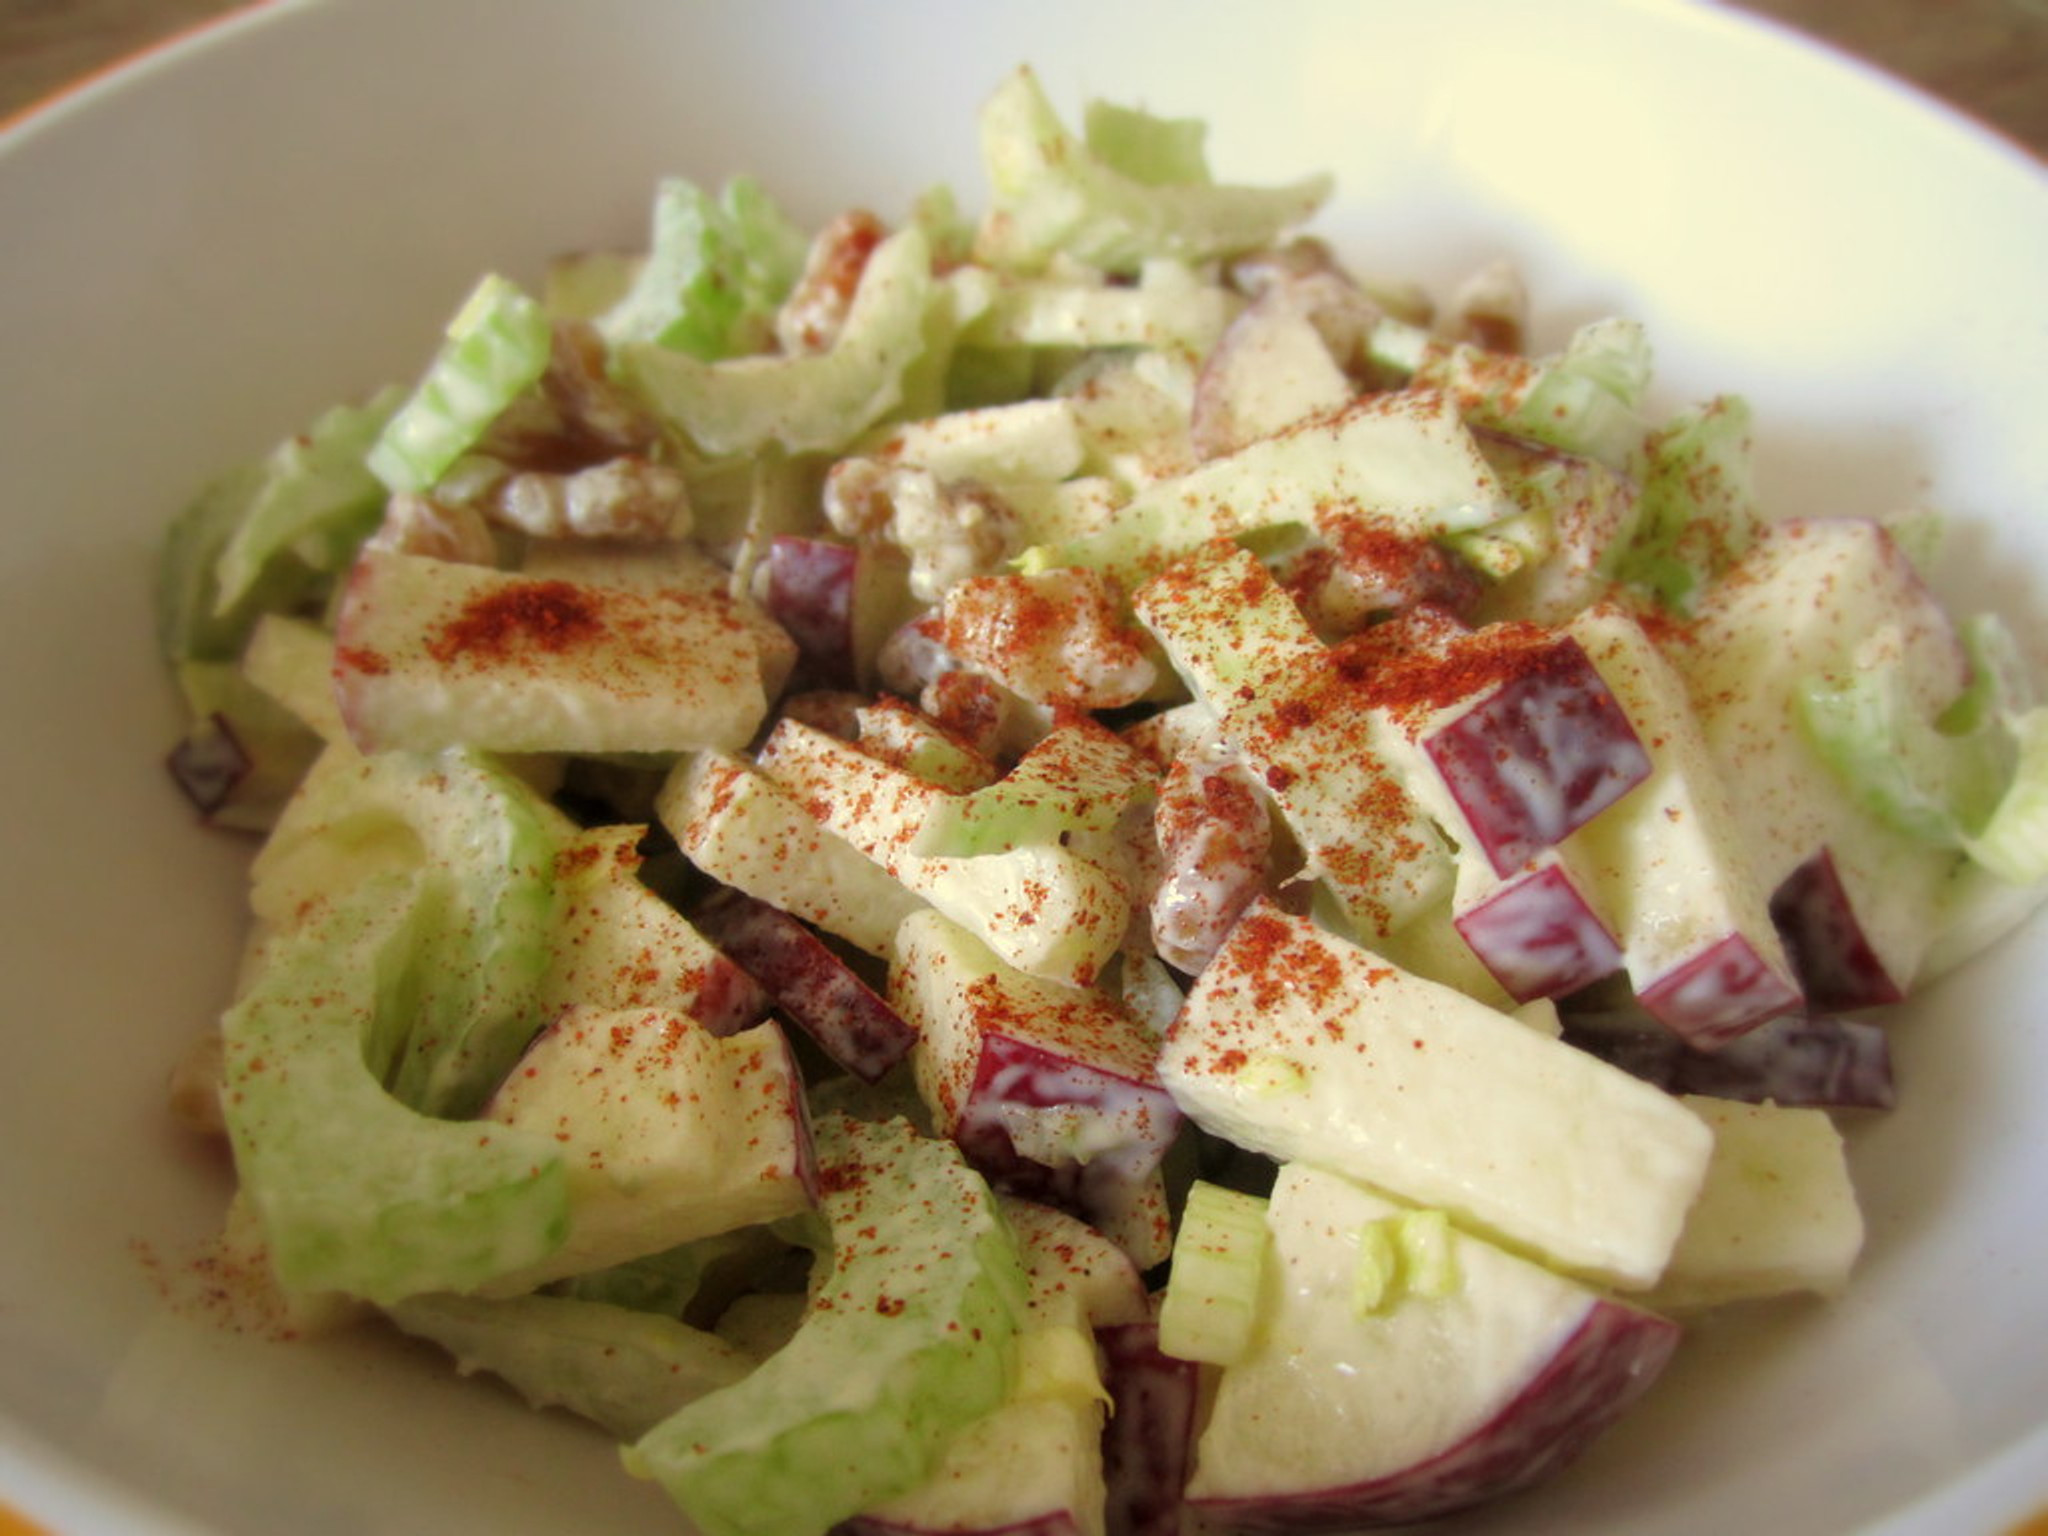 Recipe of the Day! austiNuts Waldorf Salad